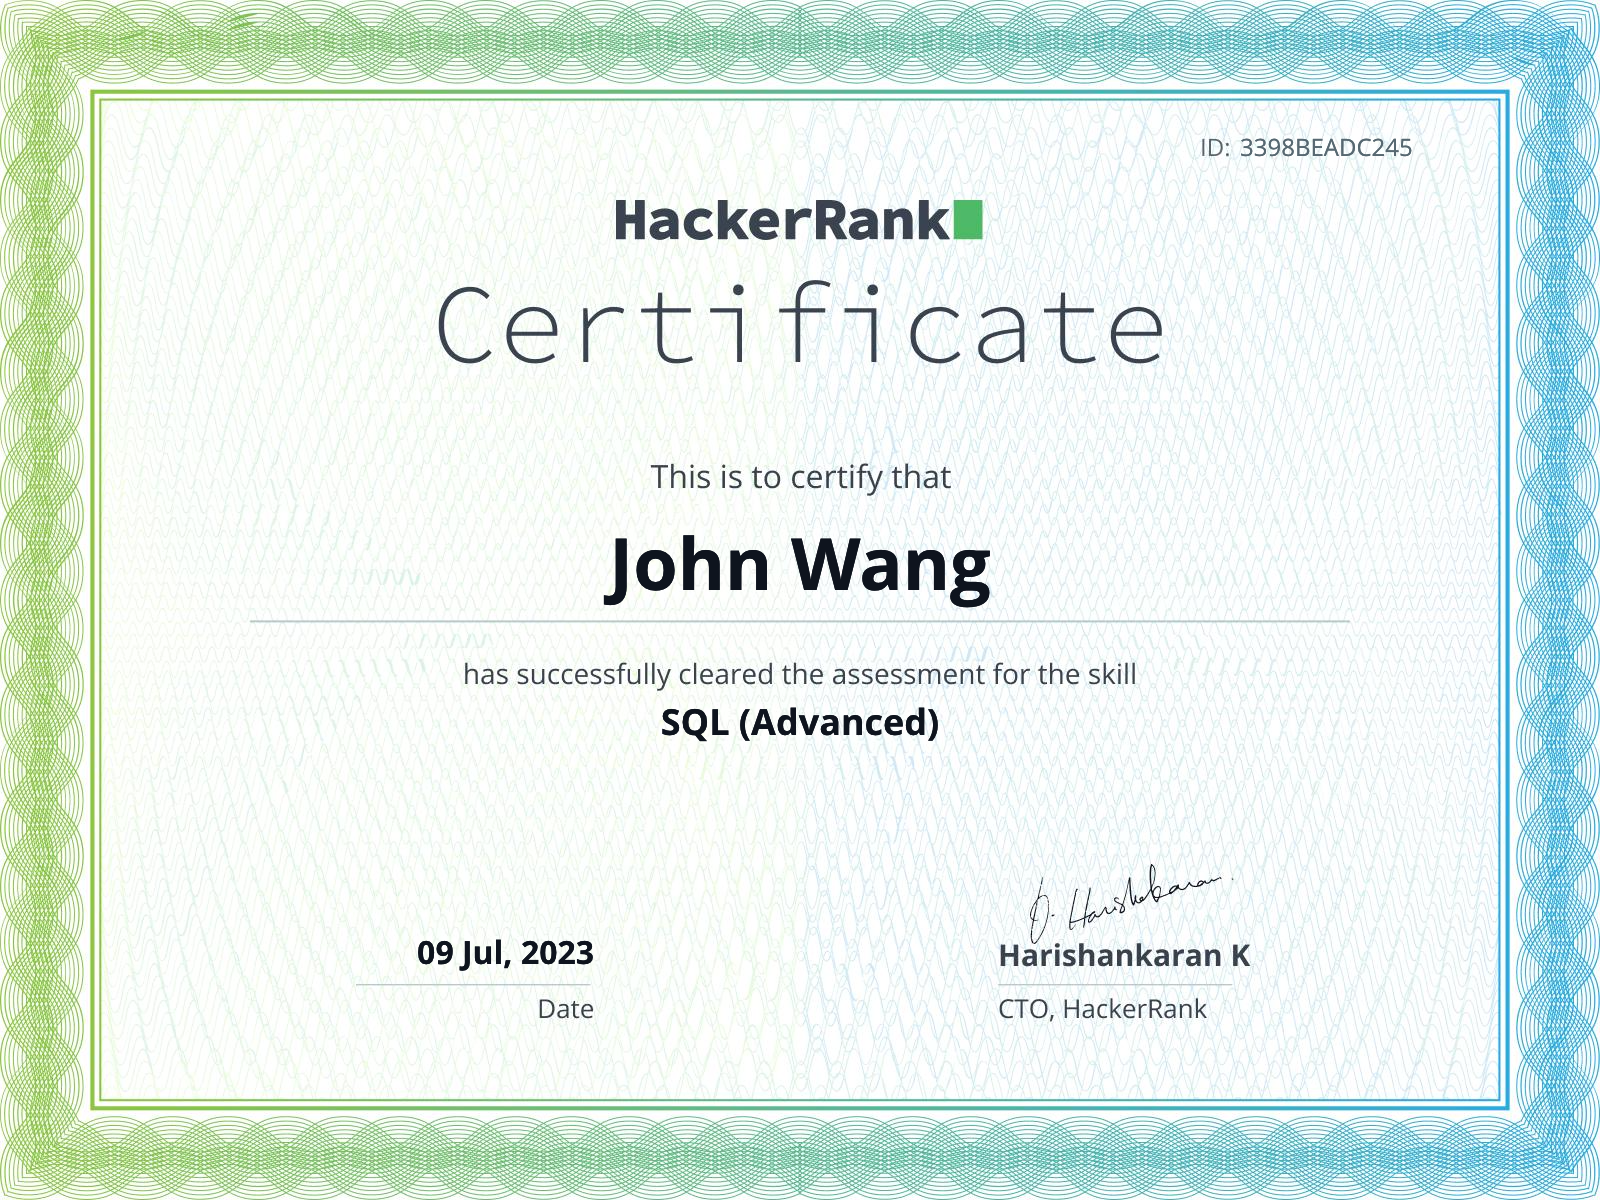 John's SQL (Advanced) from HackerRank